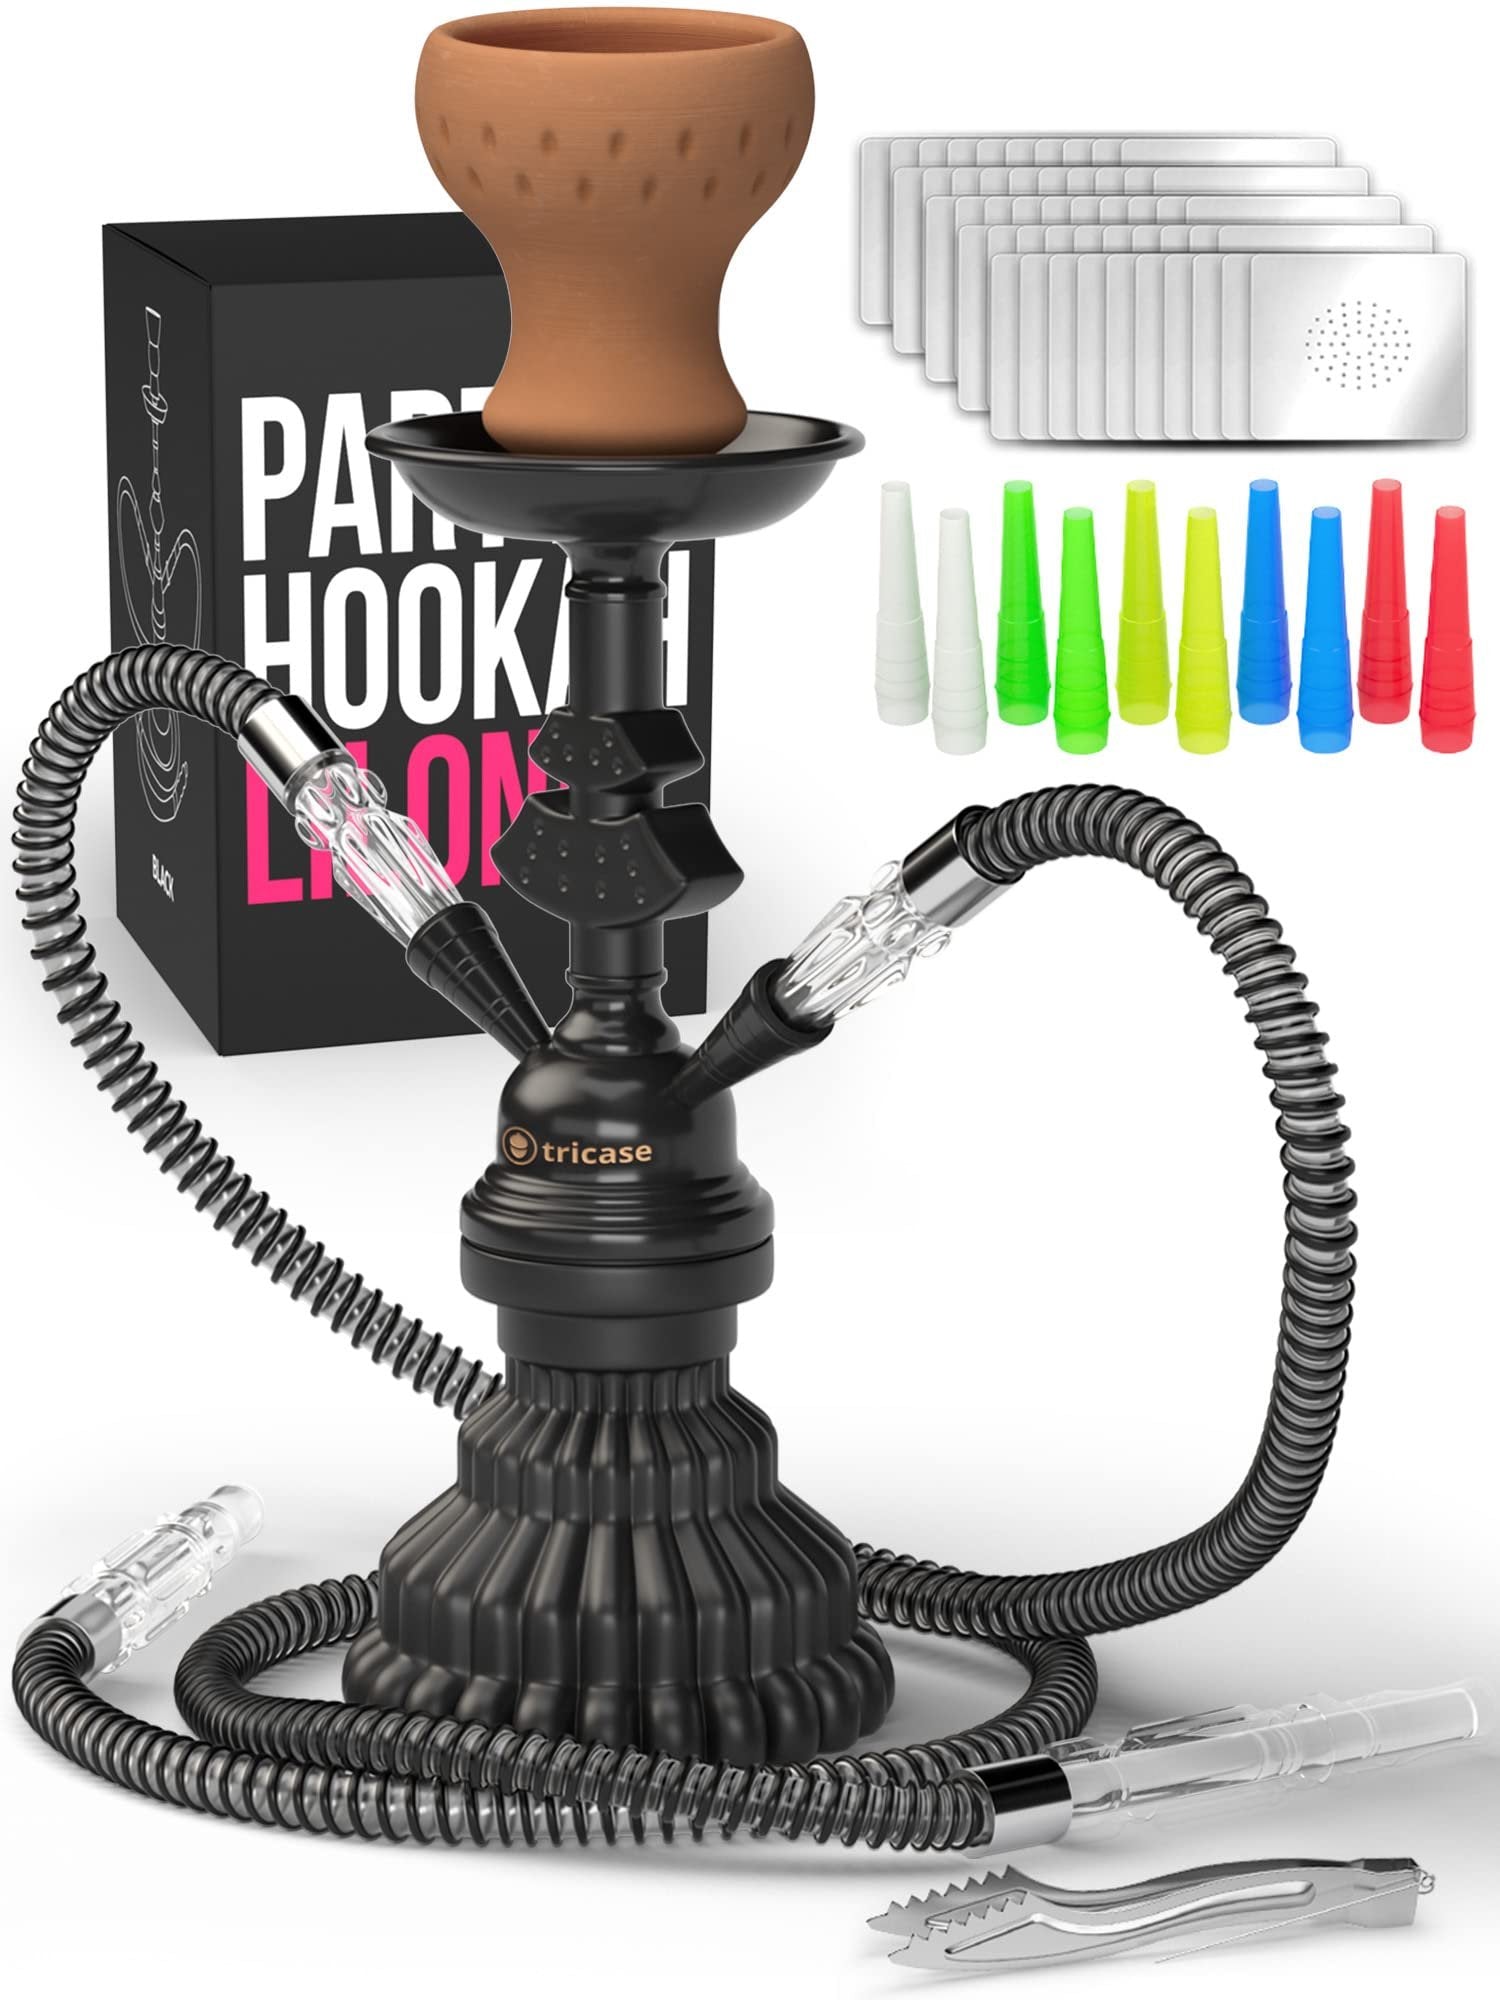 LilOne 12 Black Hookah Set - 2 Hose Kit with Foil, Tips, Mouthpiece, Tongs - Portable